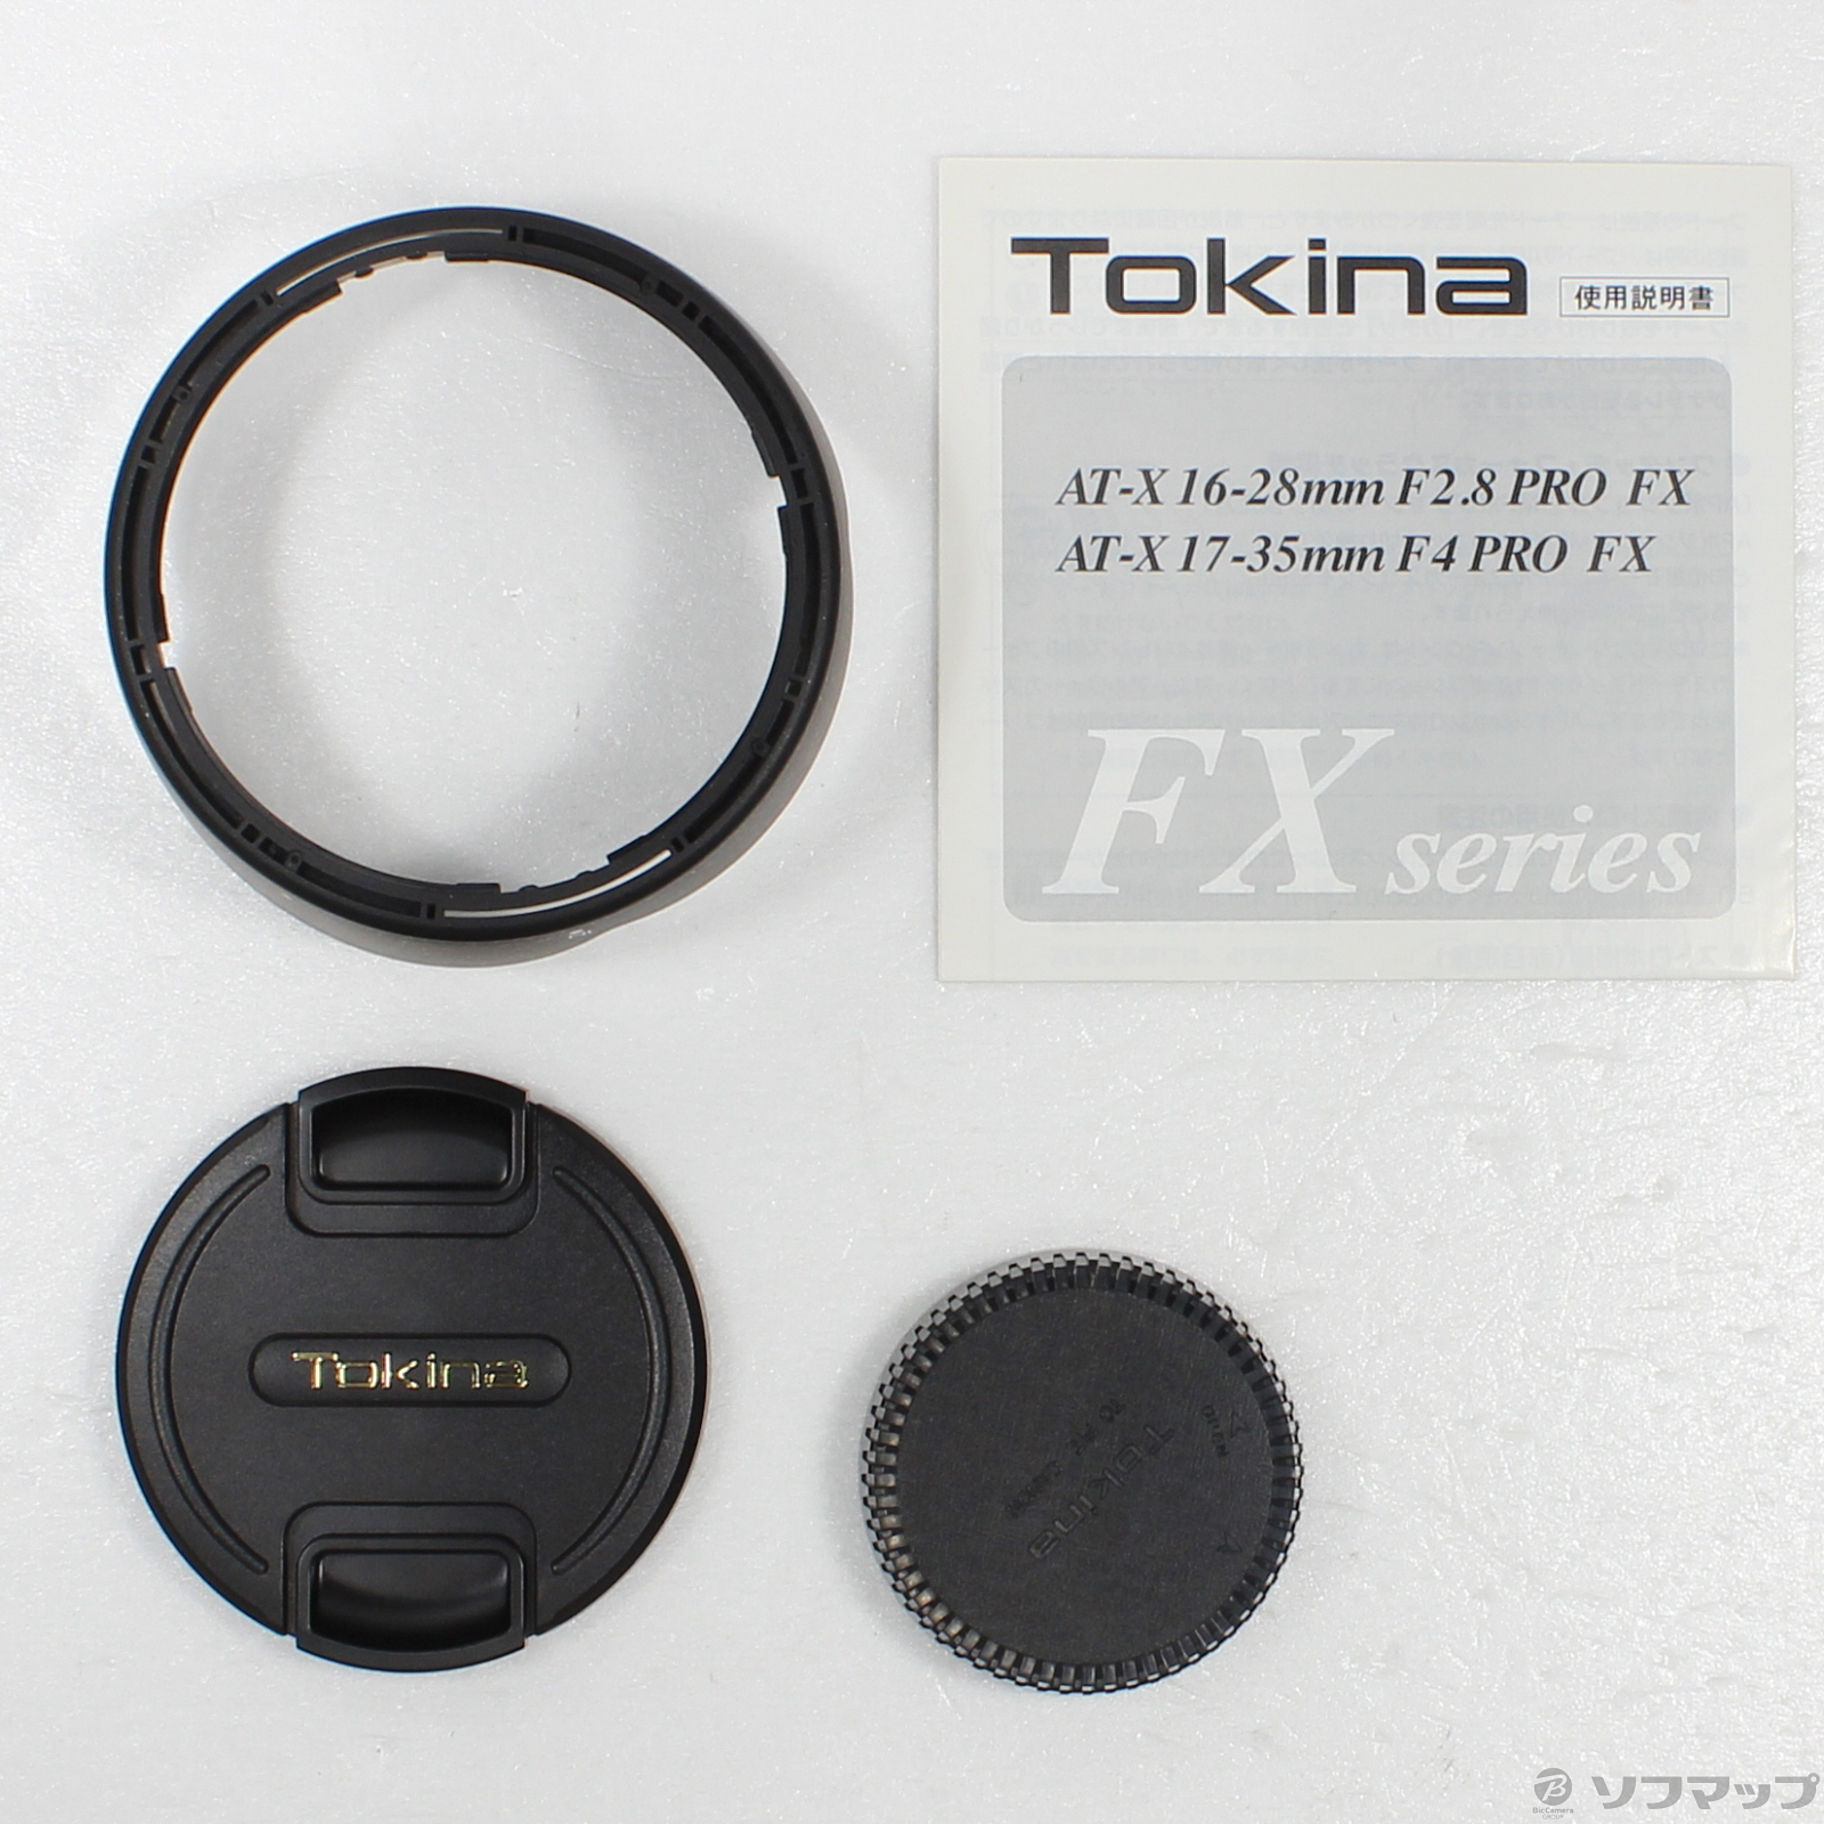 AT-X 17-35mm F4 PRO FXマウントNikon - レンズ(ズーム)